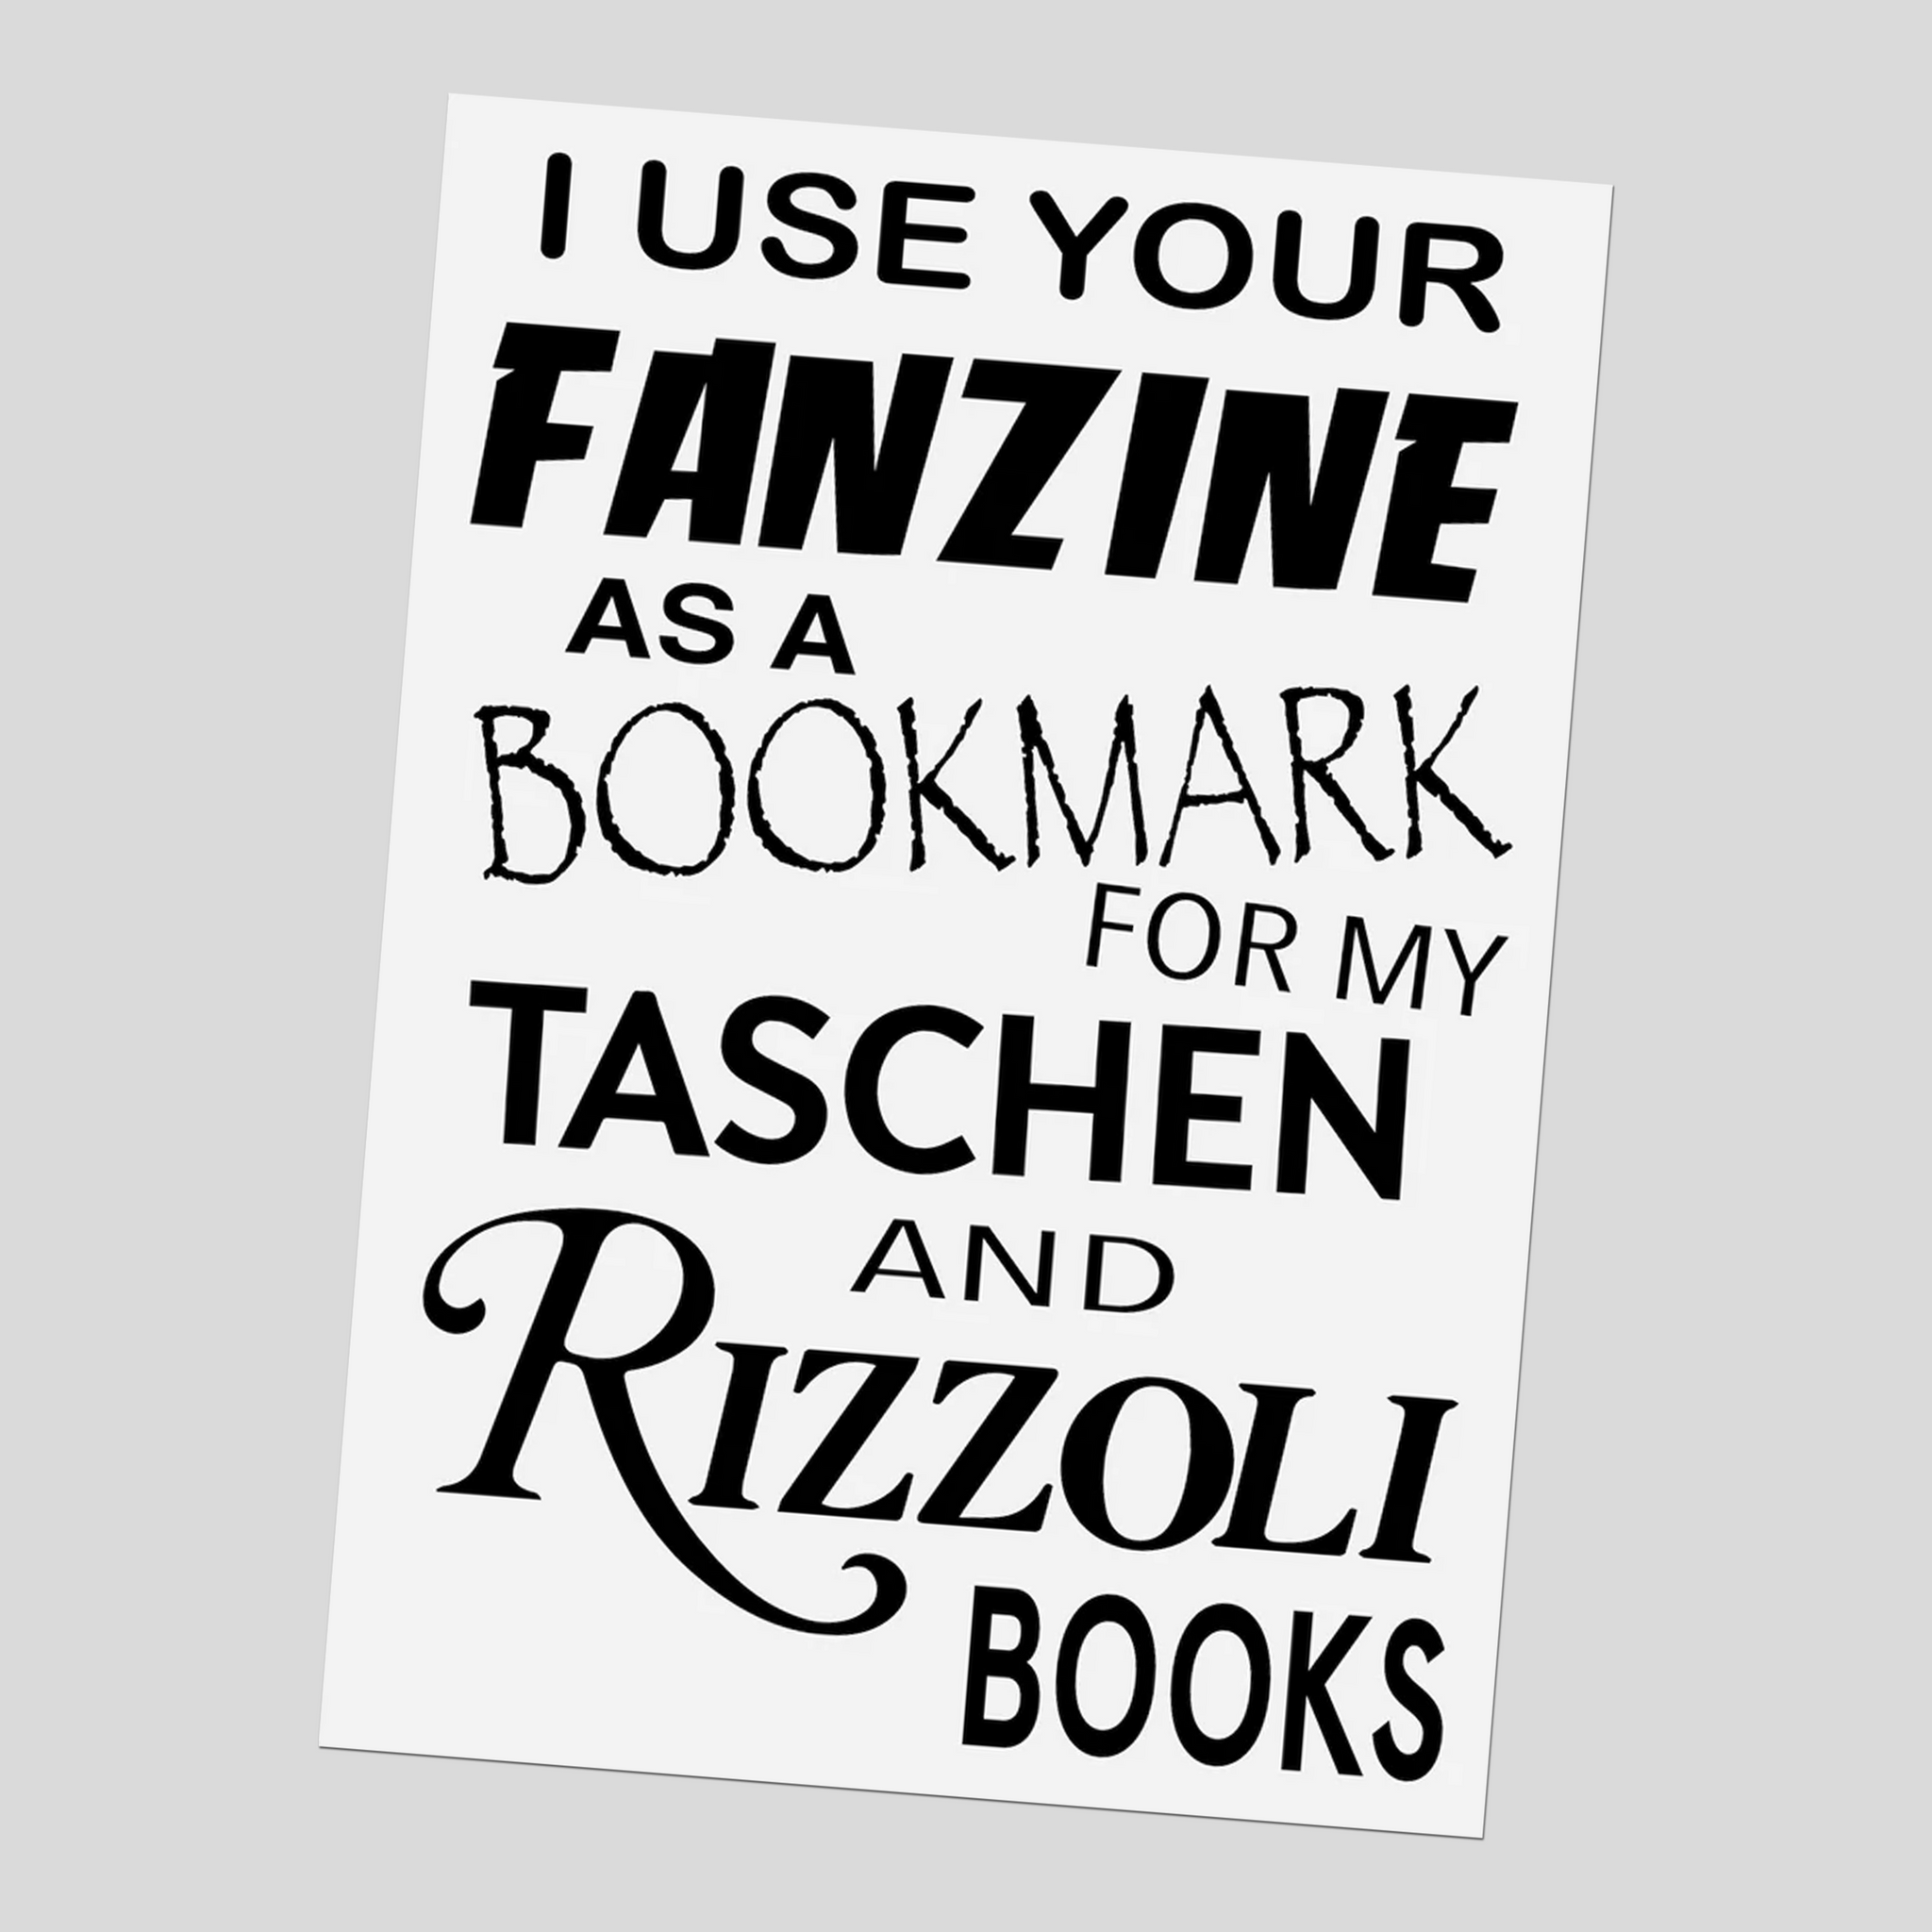 "Your fanzine as a bookmark"